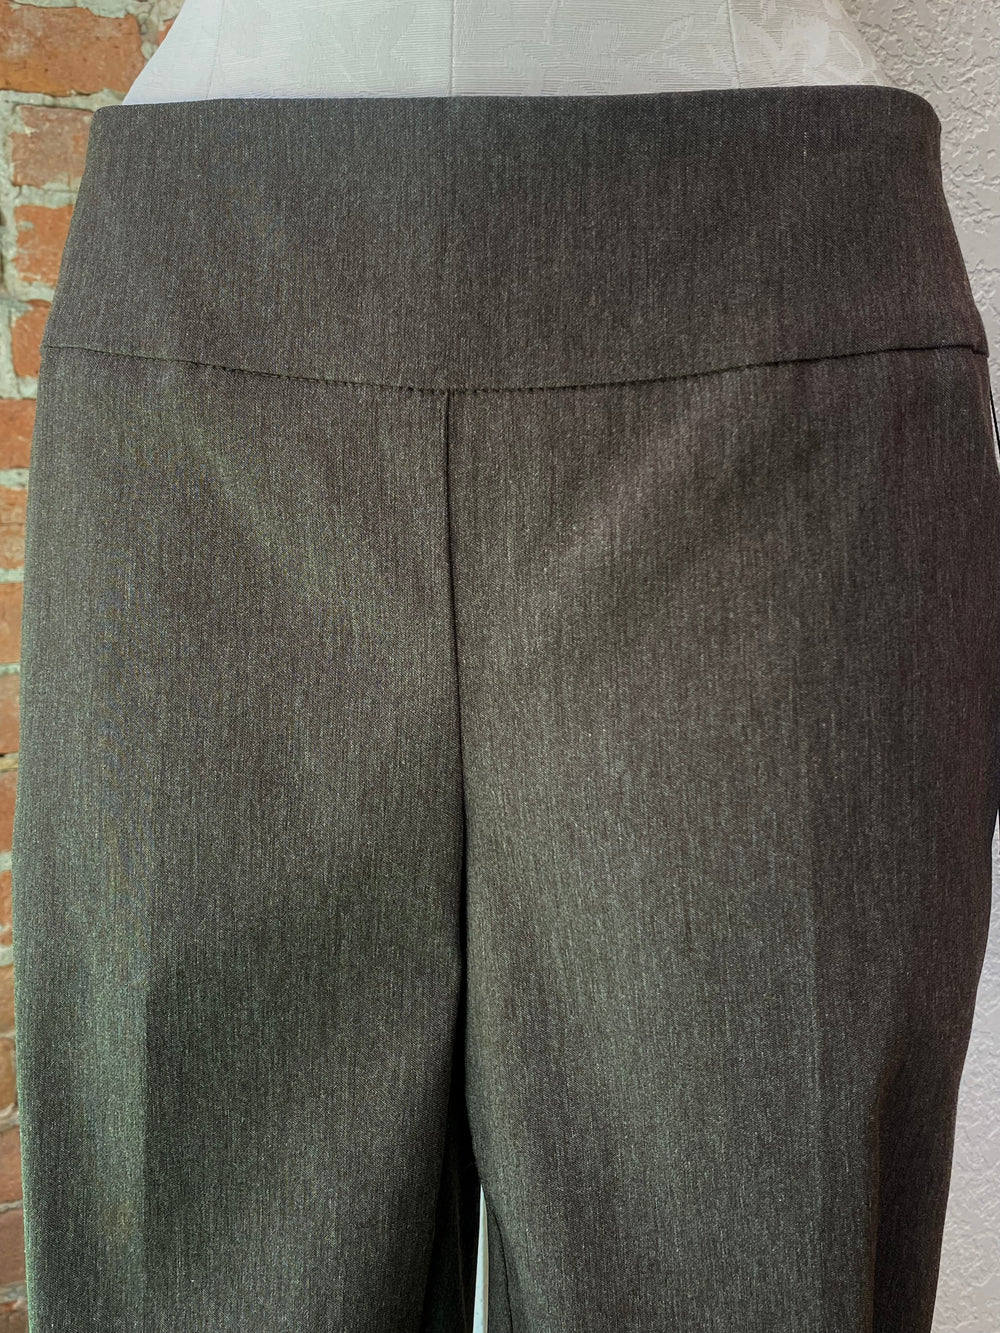 Renuar pants 1417, straight leg SALE Sizes 0, 2, 4, 6, 16